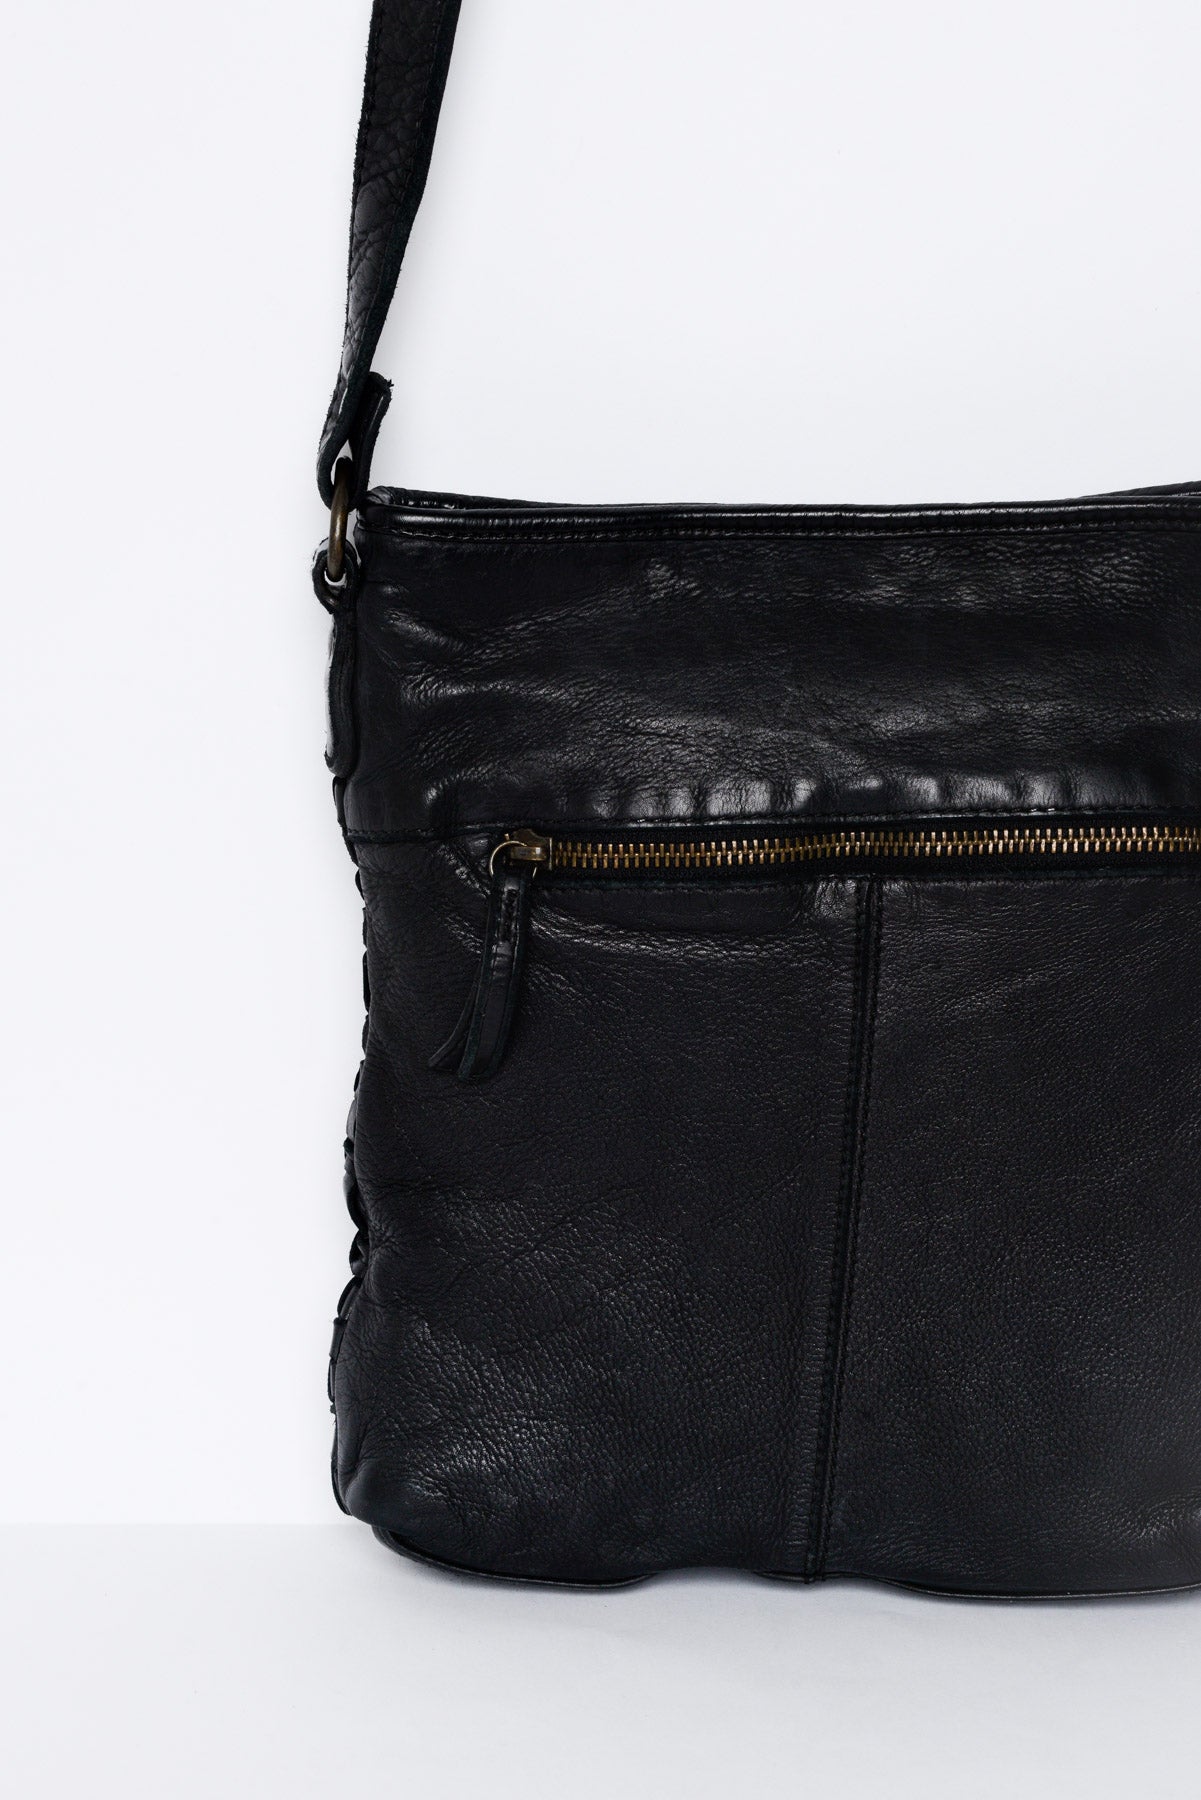 Zara Black Woven Leather Bag – Blue 